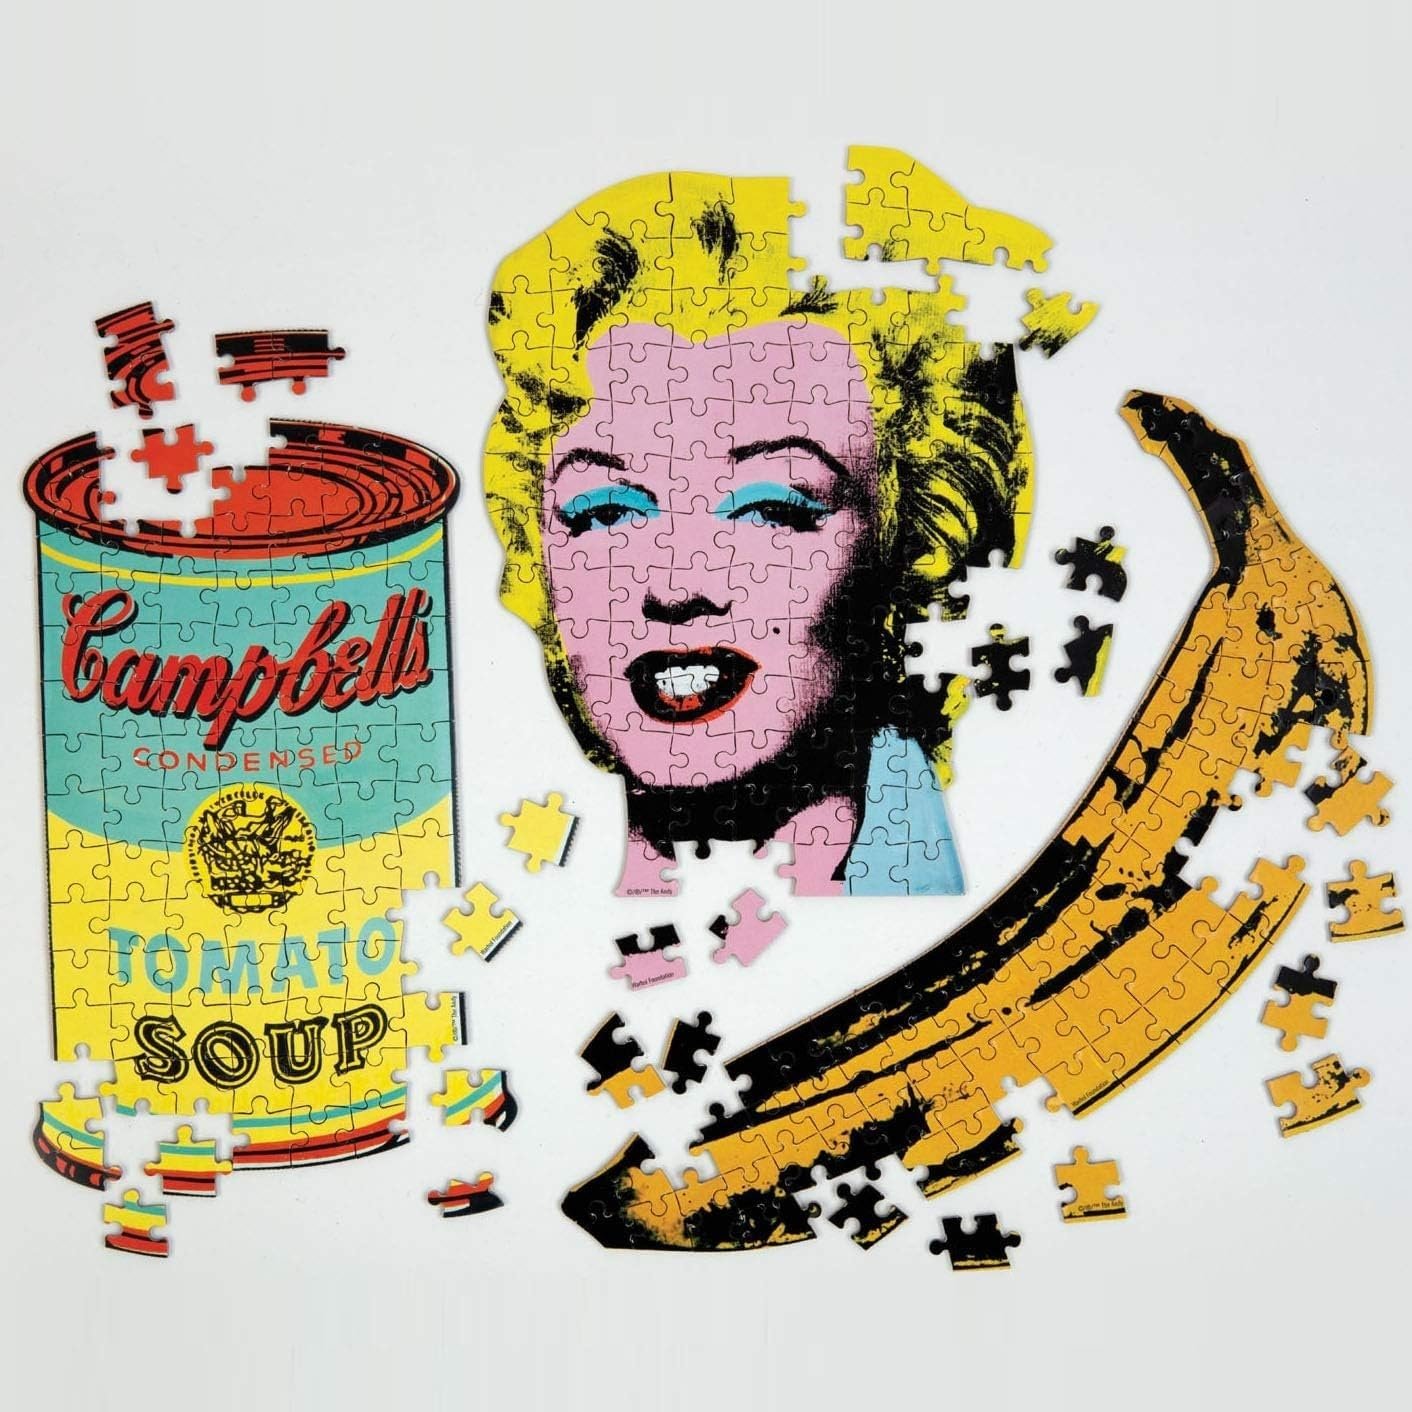 Galison Andy Warhol Mini Shaped Puzzle Banana, Multicolor